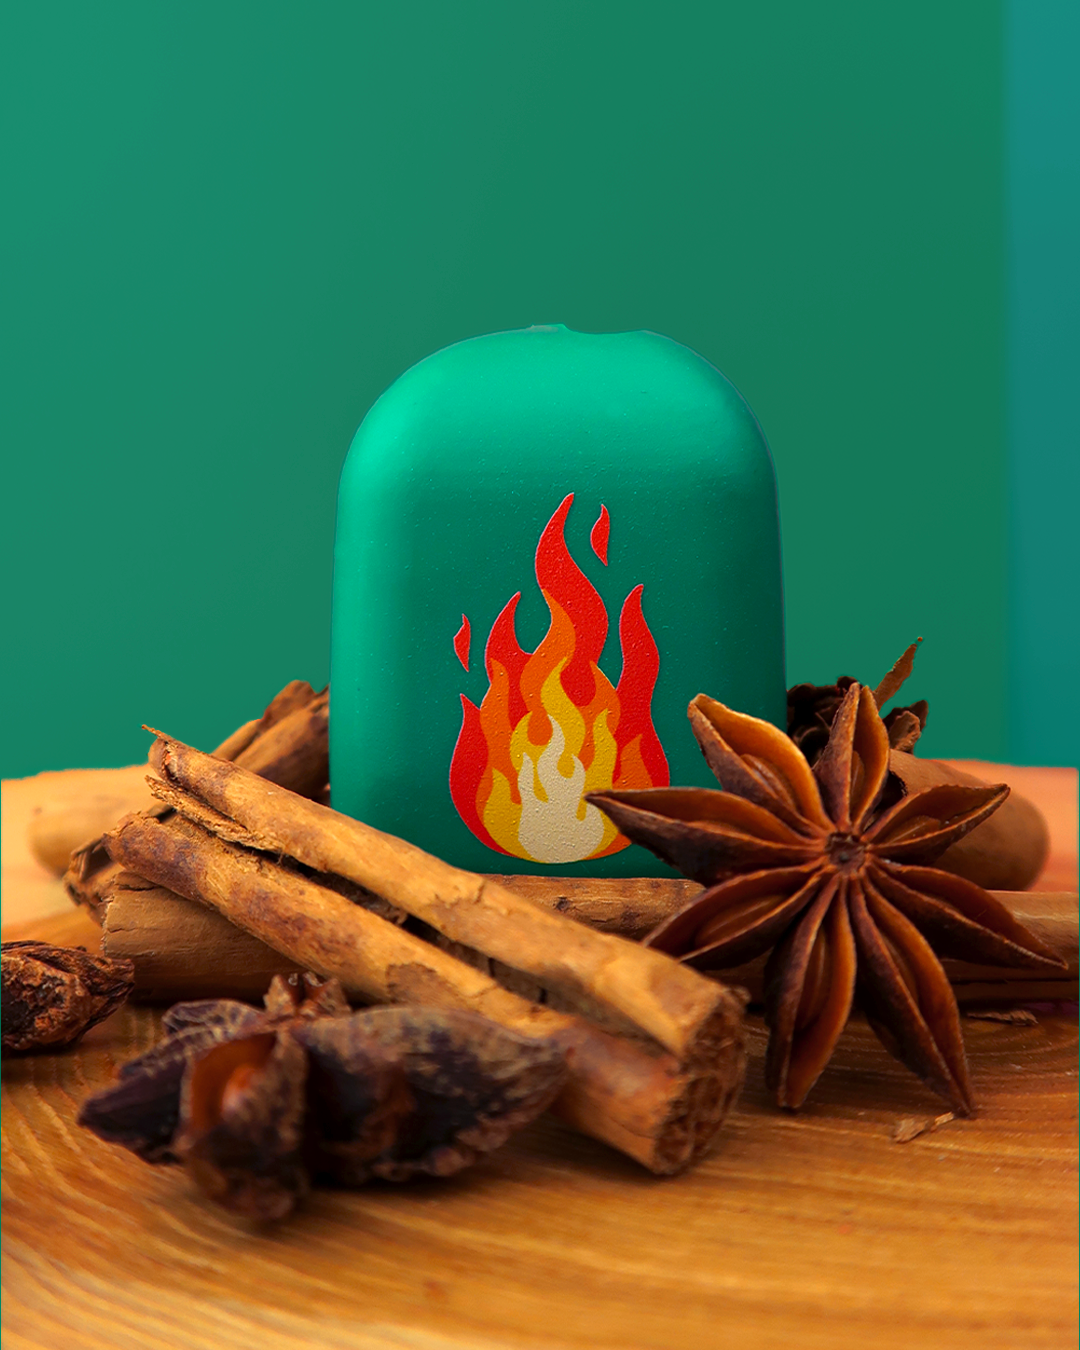 Omnipod Cover - Print - Flame Emerald